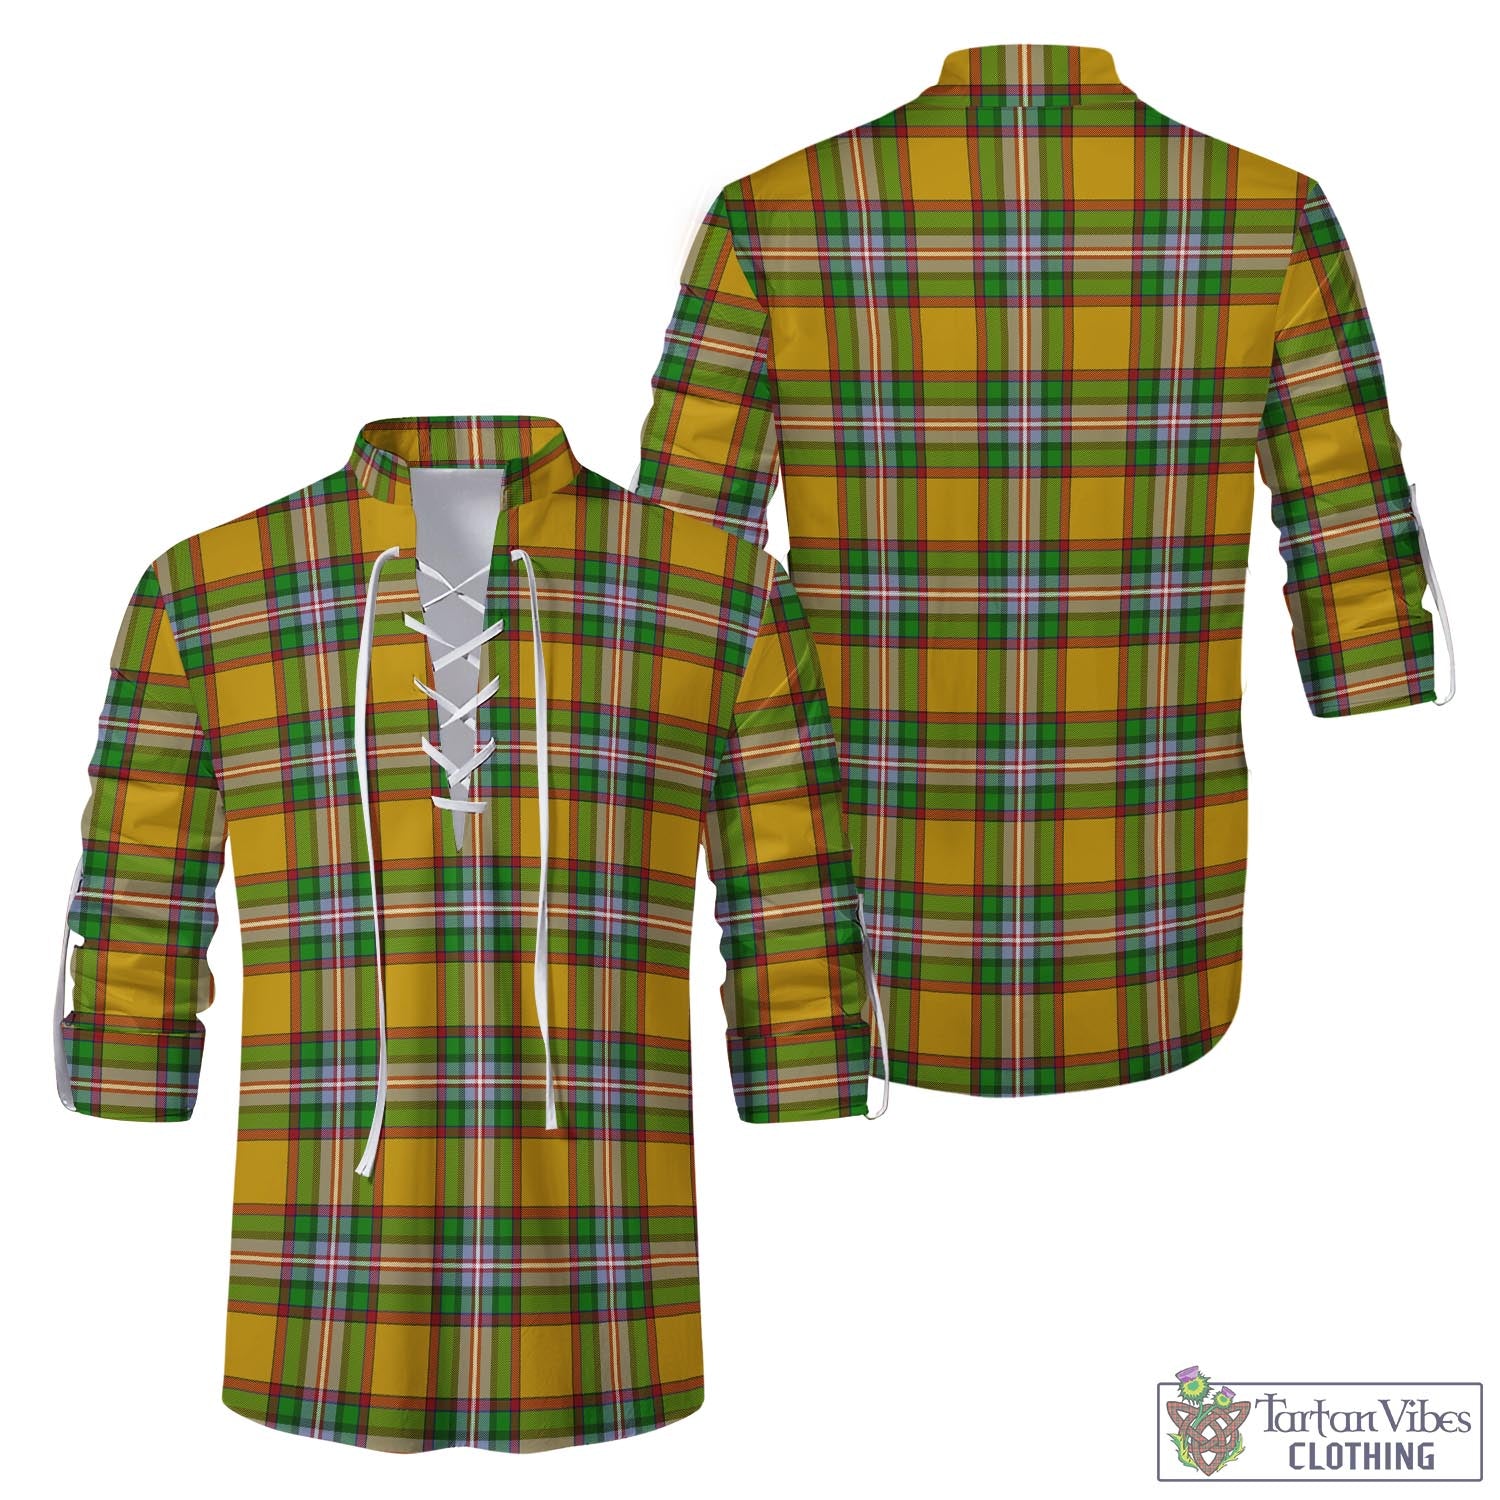 Tartan Vibes Clothing Essex County Canada Tartan Men's Scottish Traditional Jacobite Ghillie Kilt Shirt